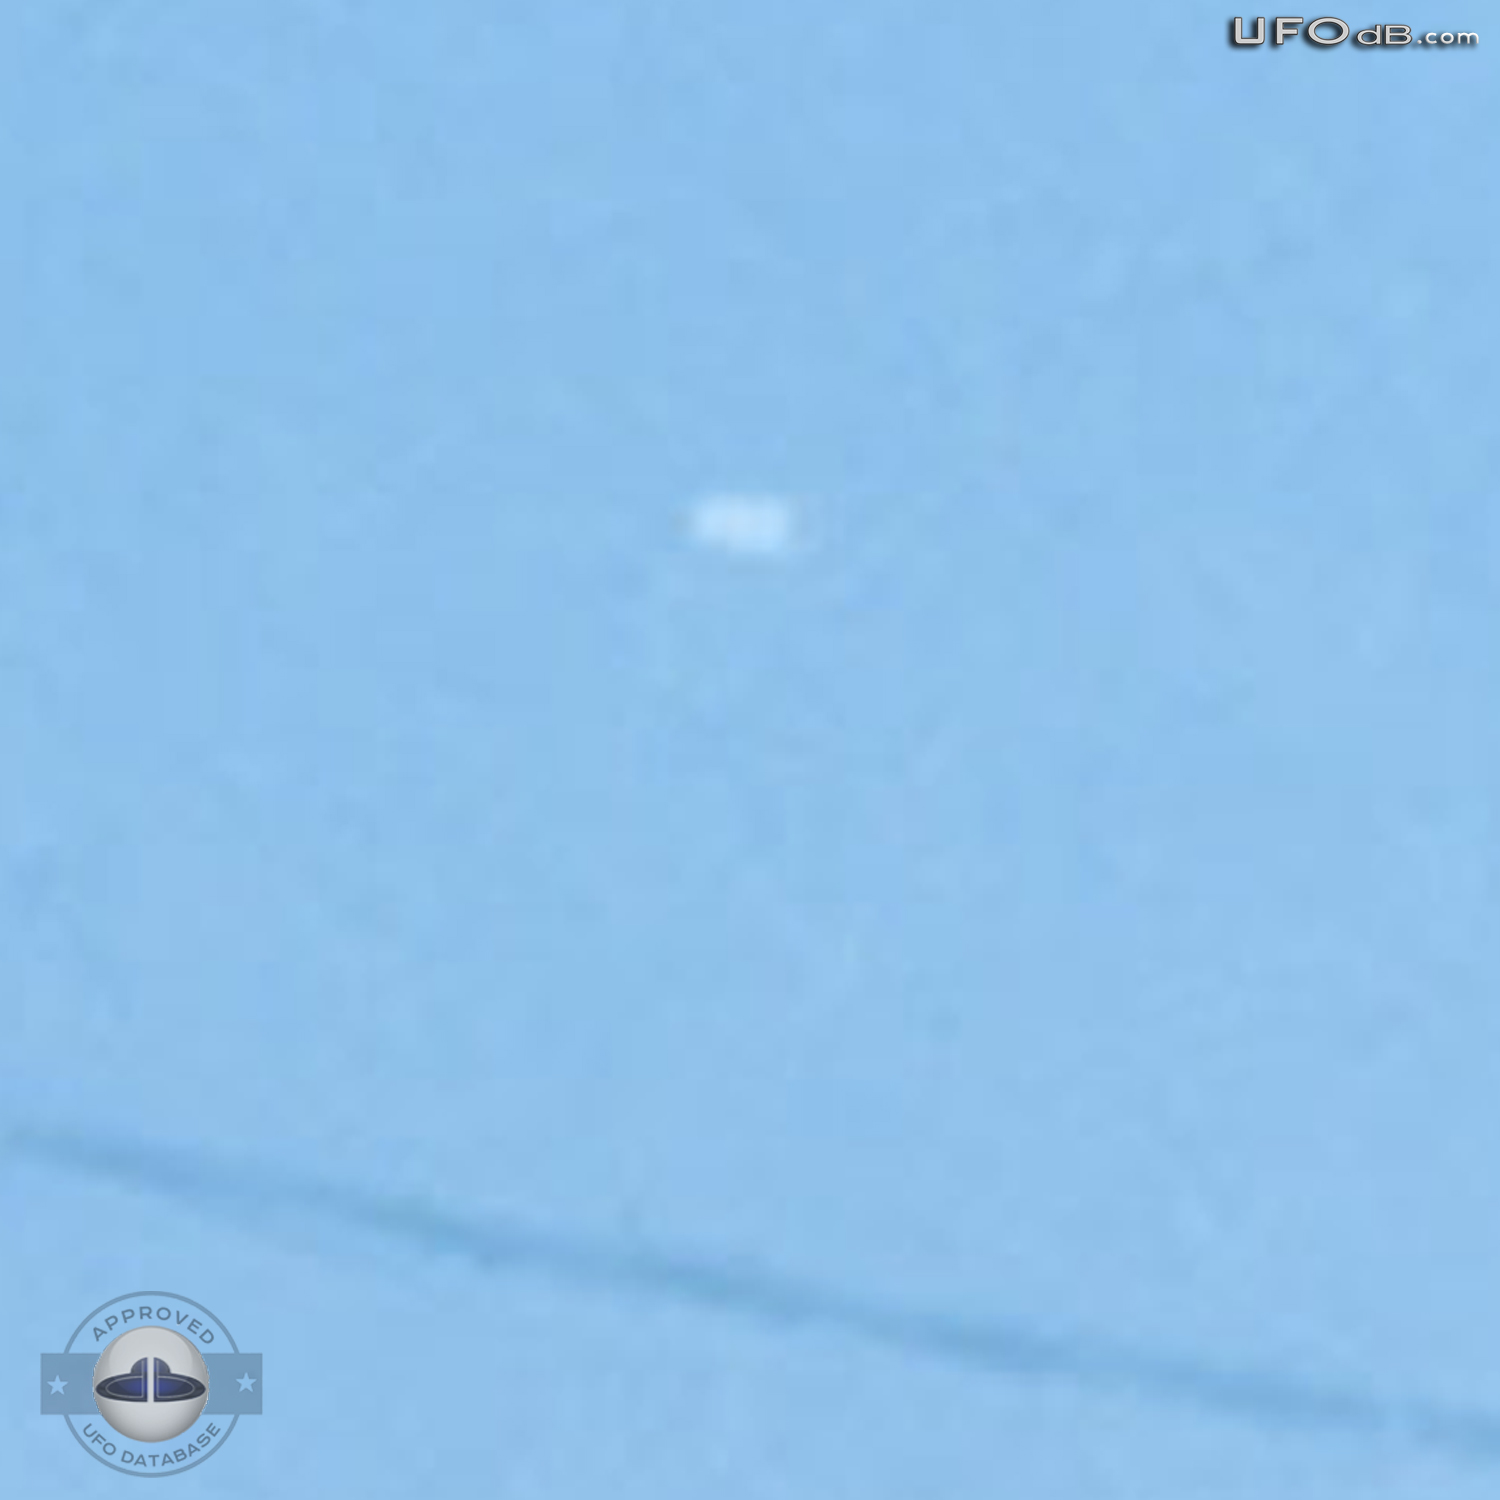 Rare Event | A UFO Picture taken in Albania | September 5 2010 UFO Picture #242-4